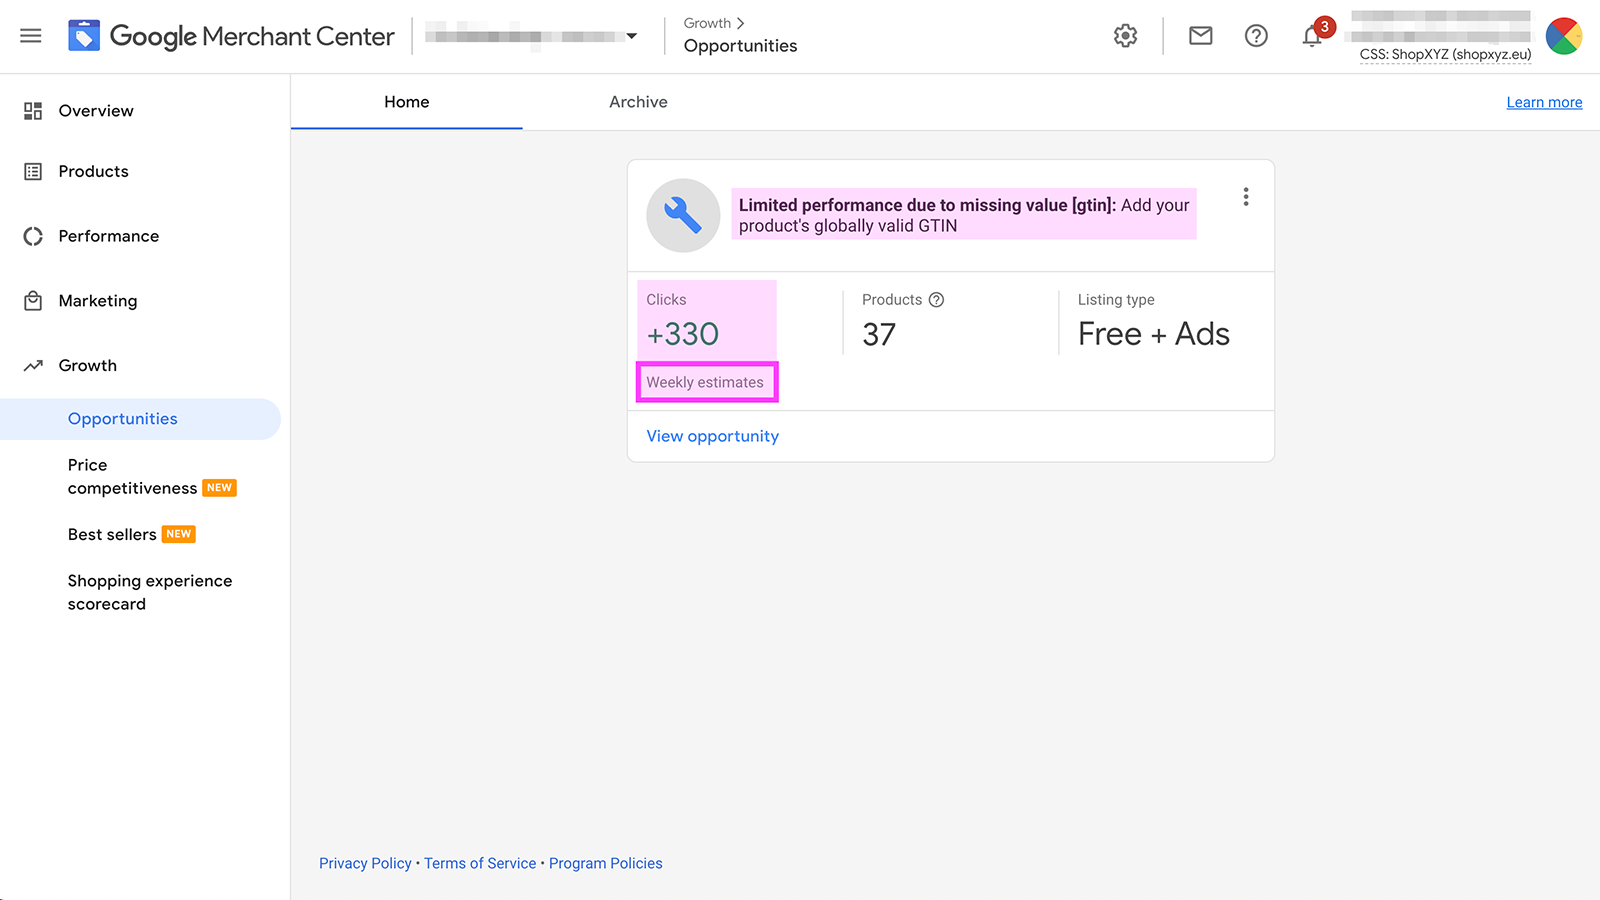 Google Merchant shown that GTINs can add 330 clicks per week